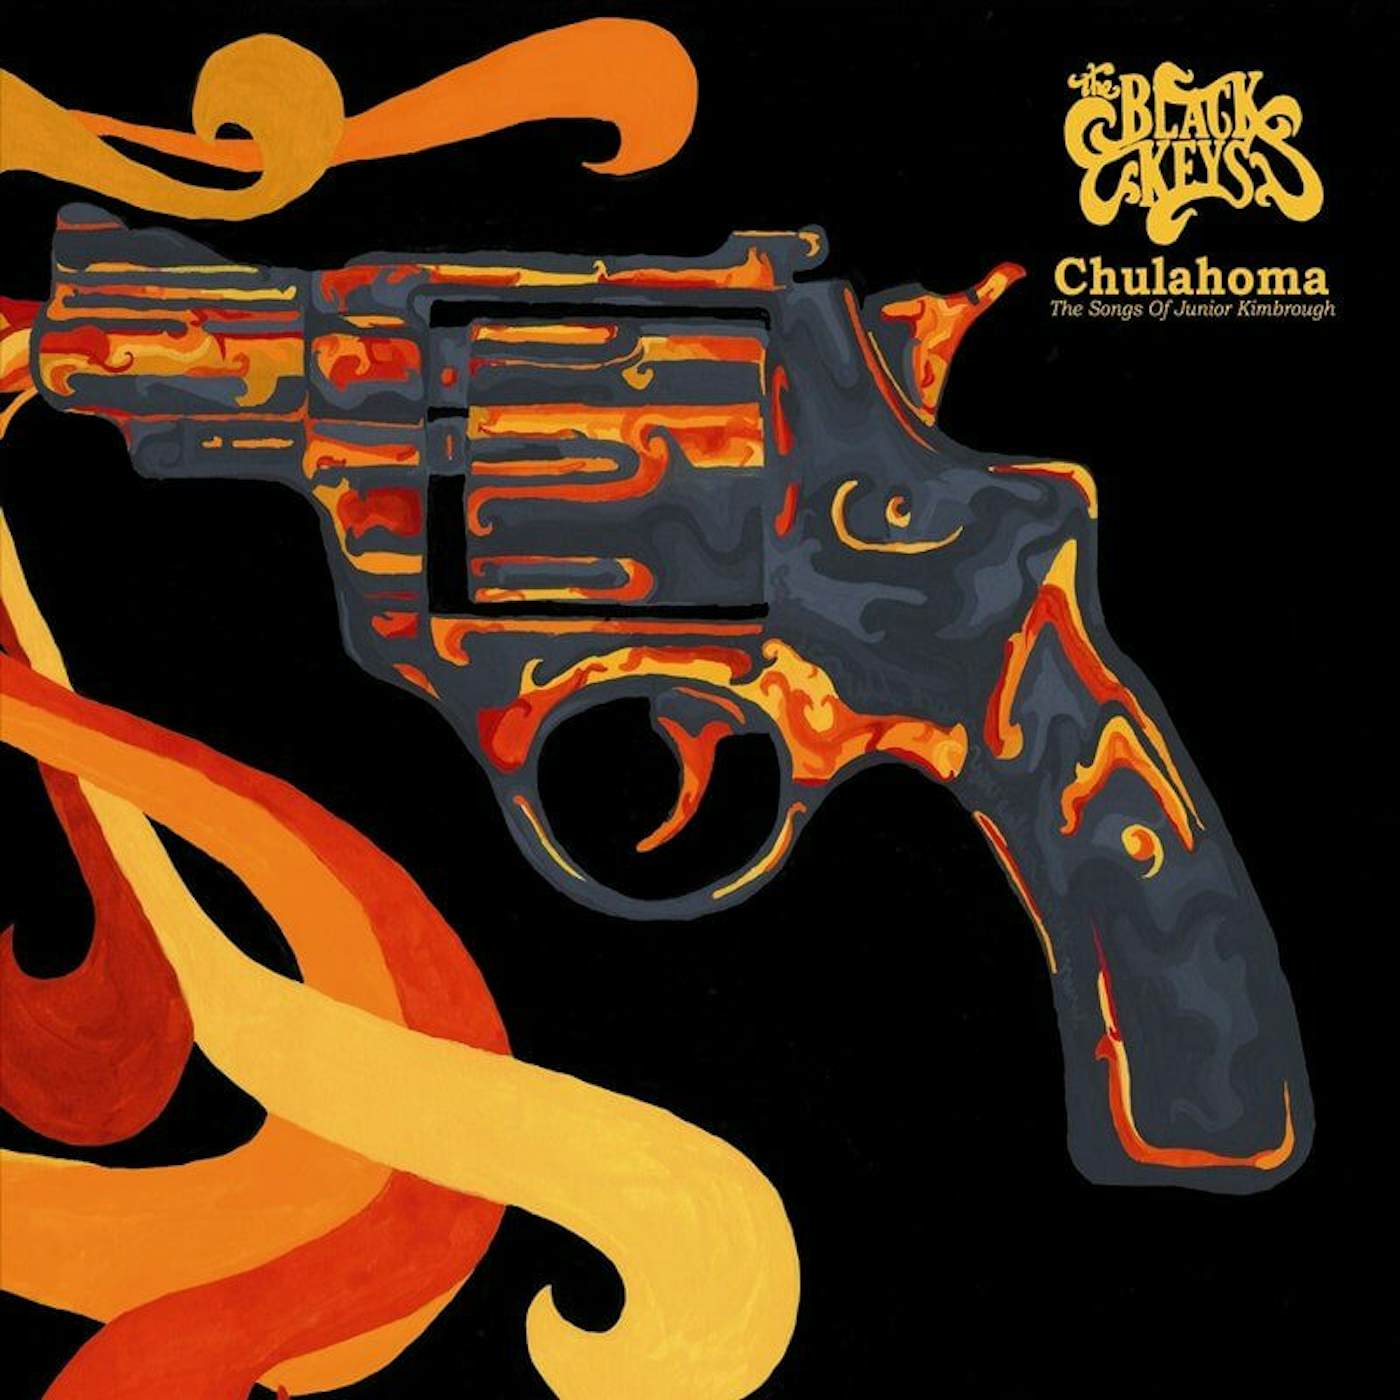 The Black Keys Chulahoma Vinyl Record